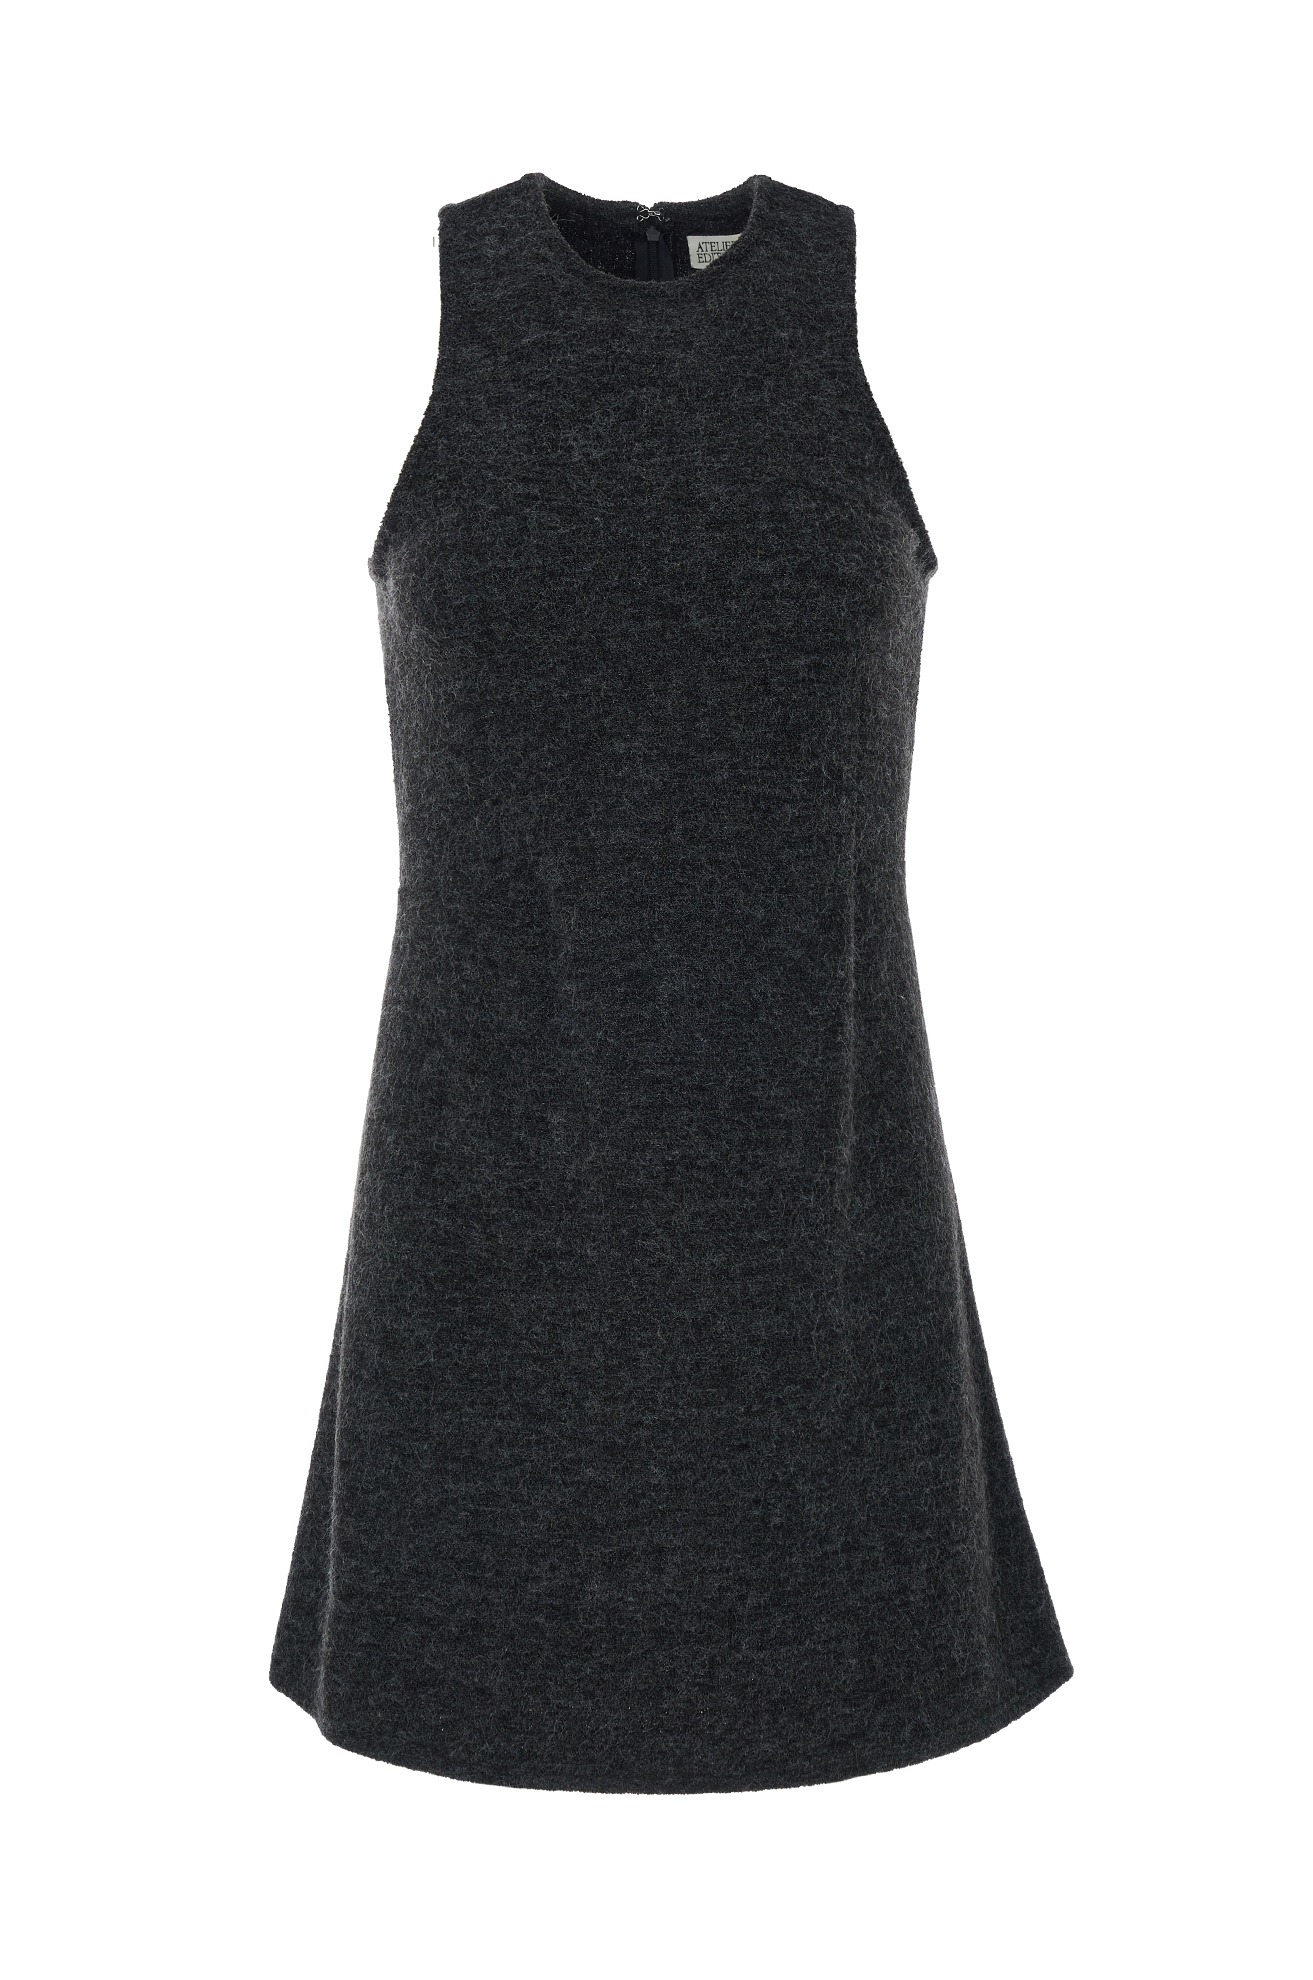 Boucle Sleeveless Dress (Charcoal)